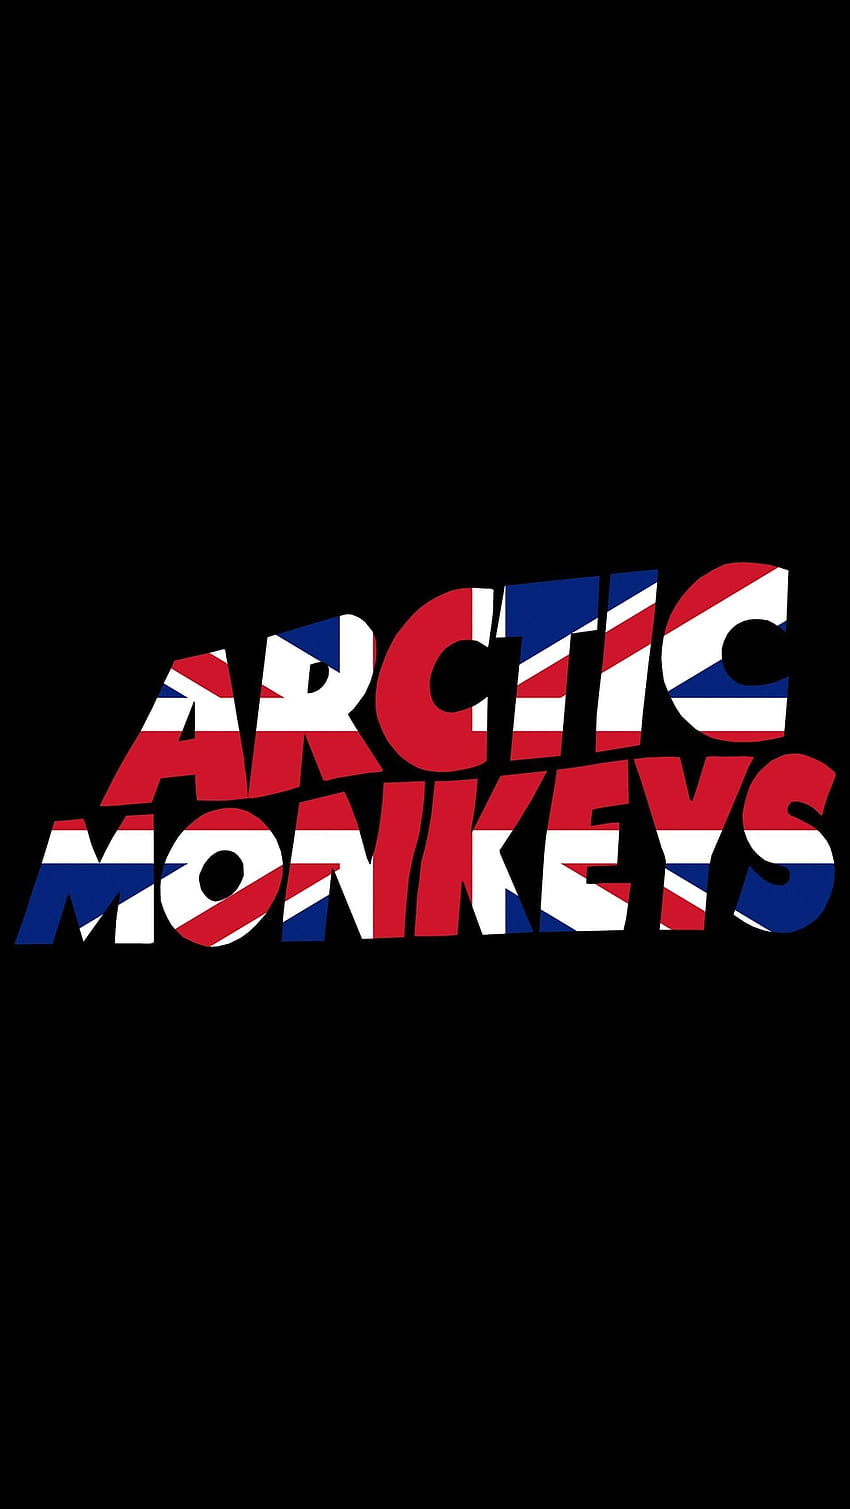 10 Top Arctic Monkeys Iphone FULL For PC Backgrounds, the doorman HD phone wallpaper